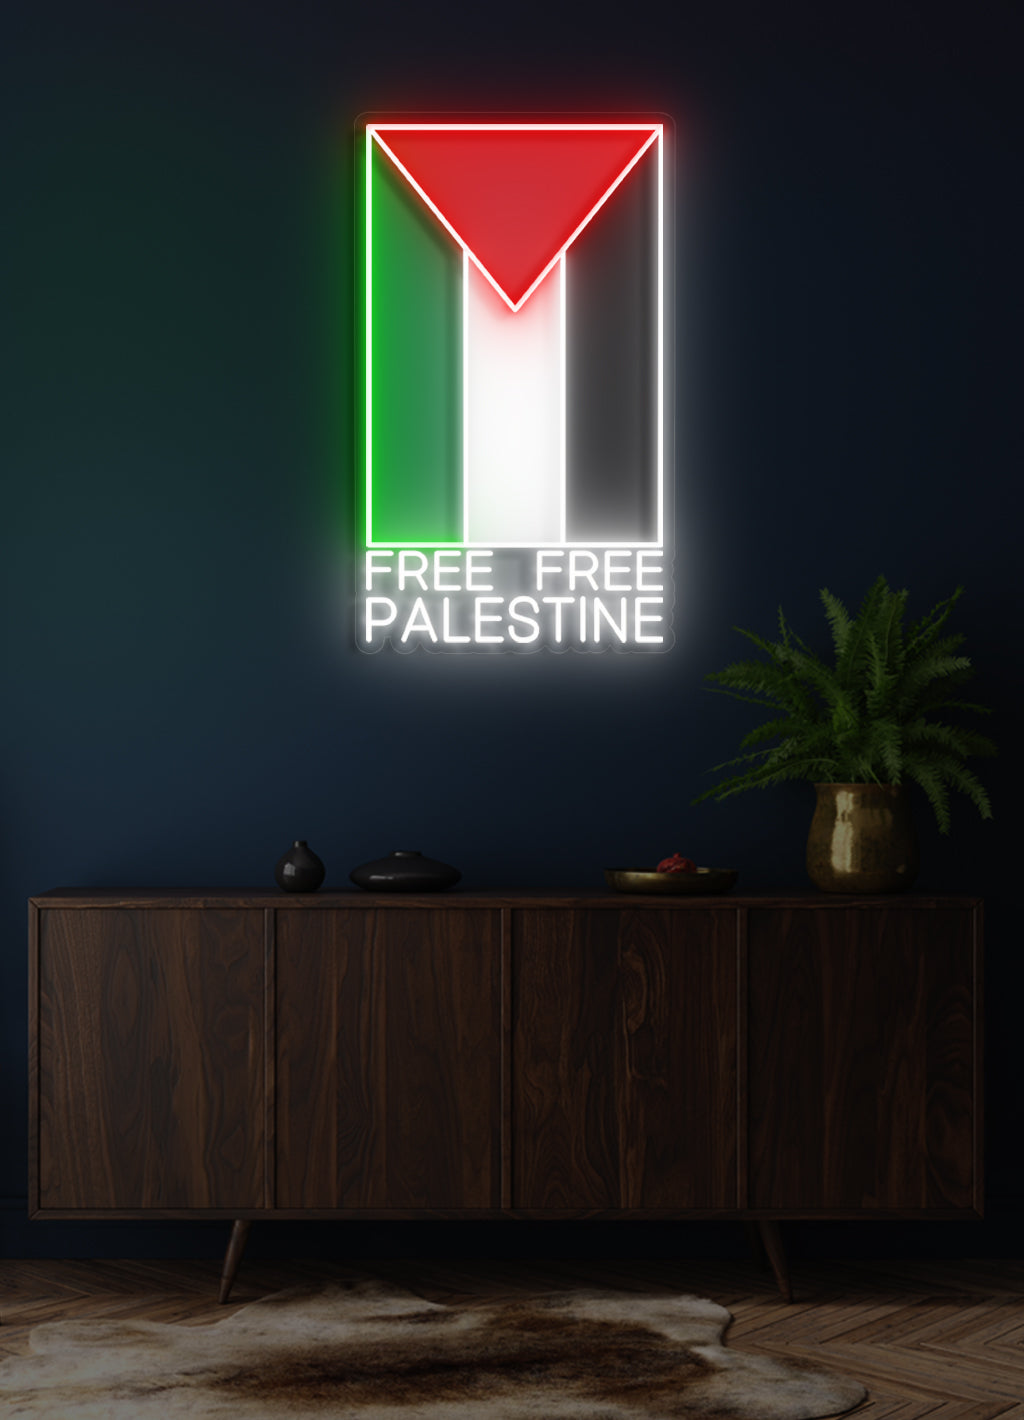 FREE FREE PALESTINE FLAG